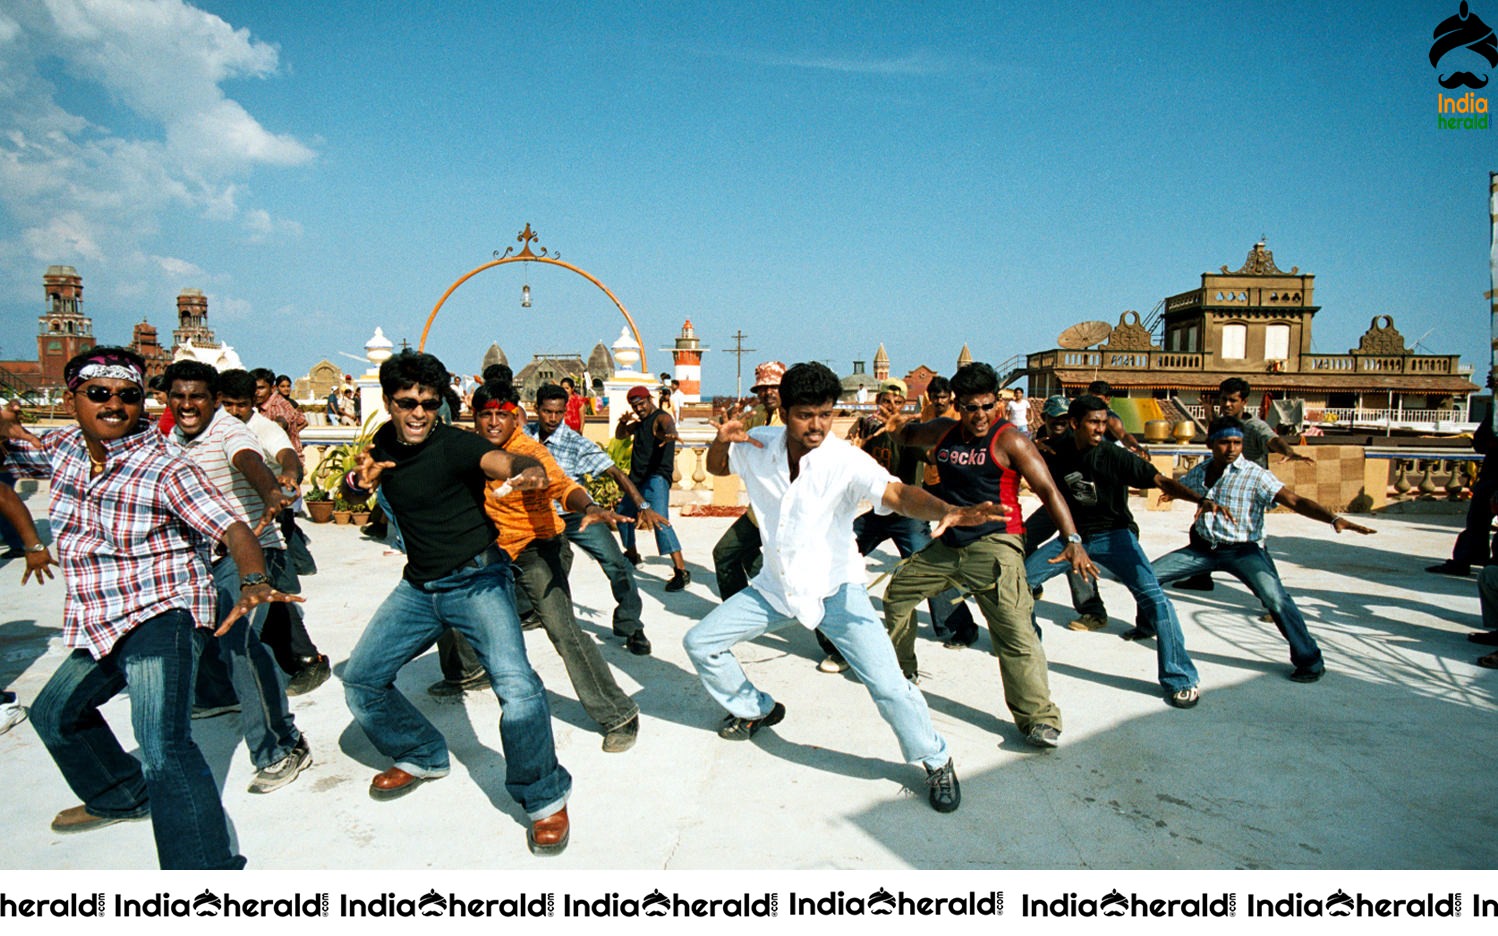 Rare and Unseen Photos of 2004 Blockbuster Okkadu Remake featuring Vijay and Trisha Set 5